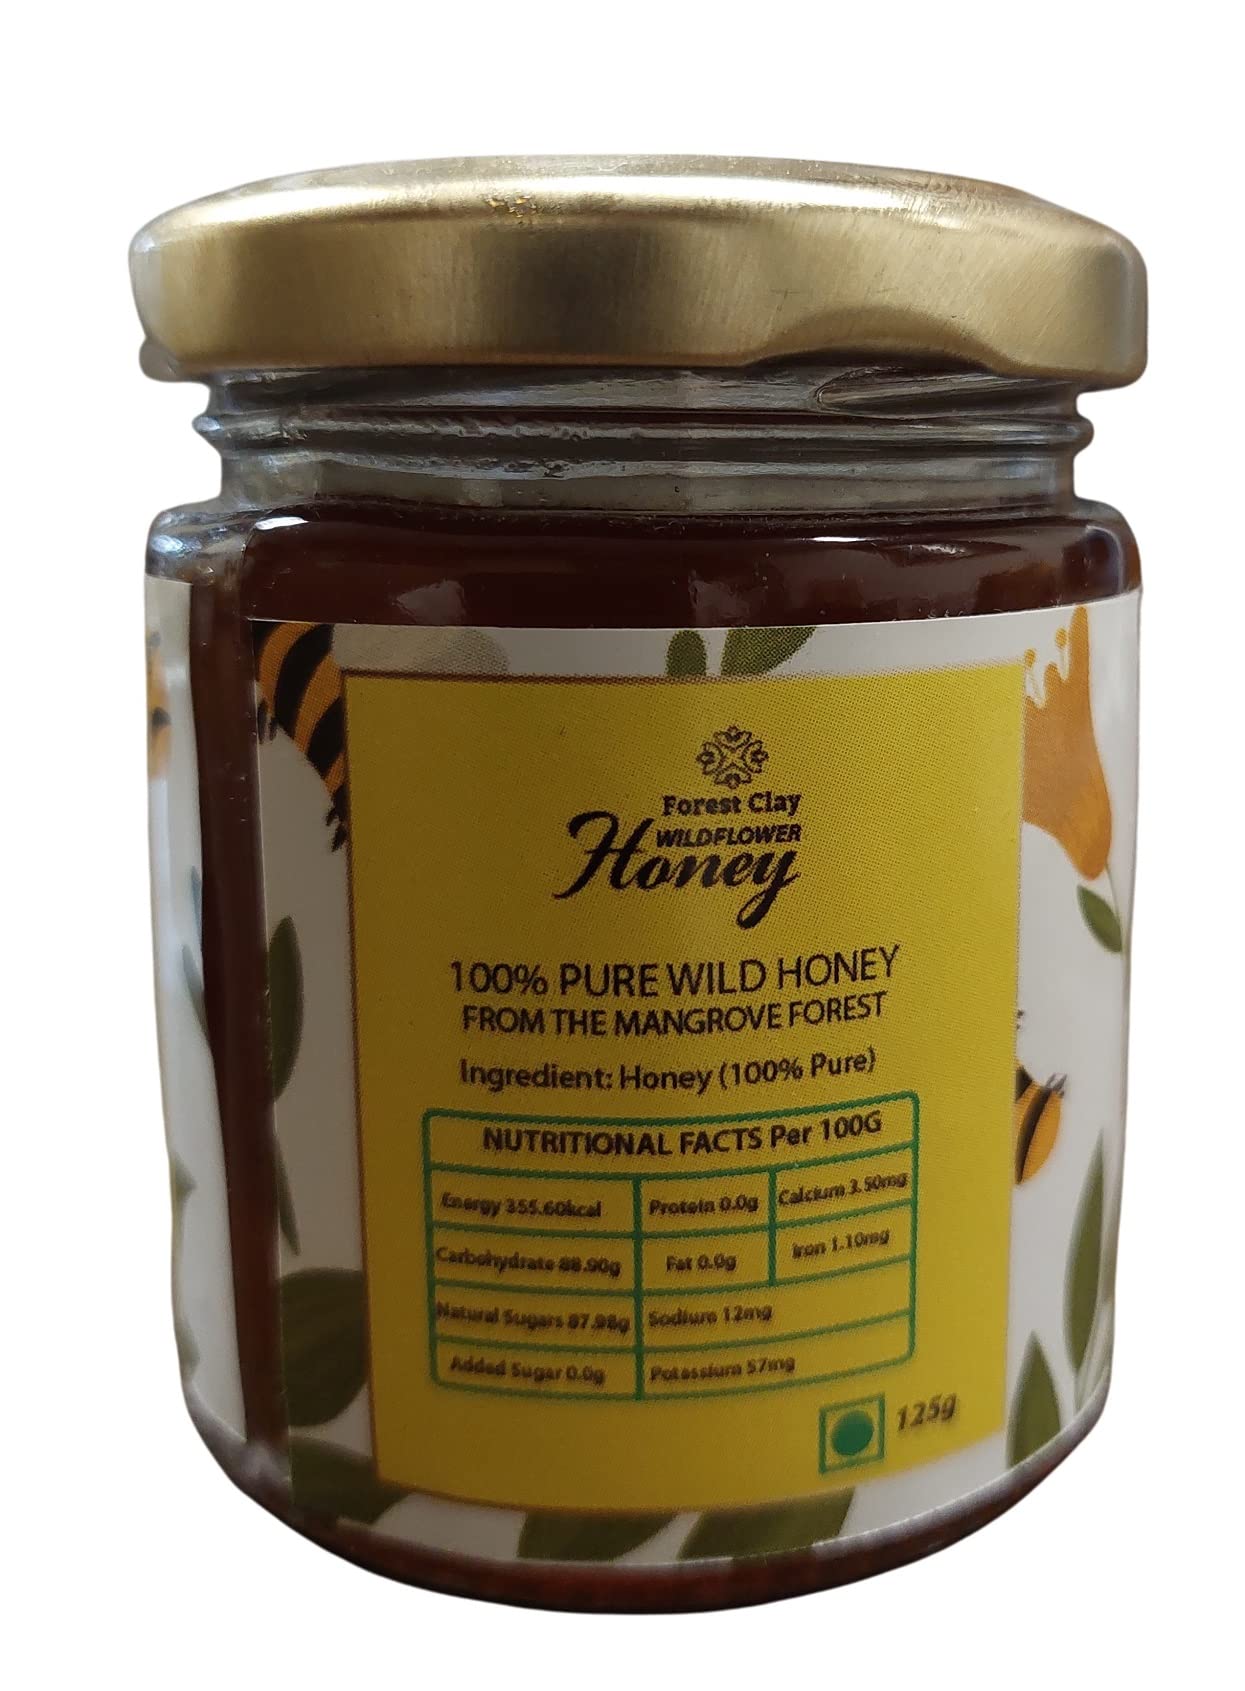 Wild Flower Mangrove Honey